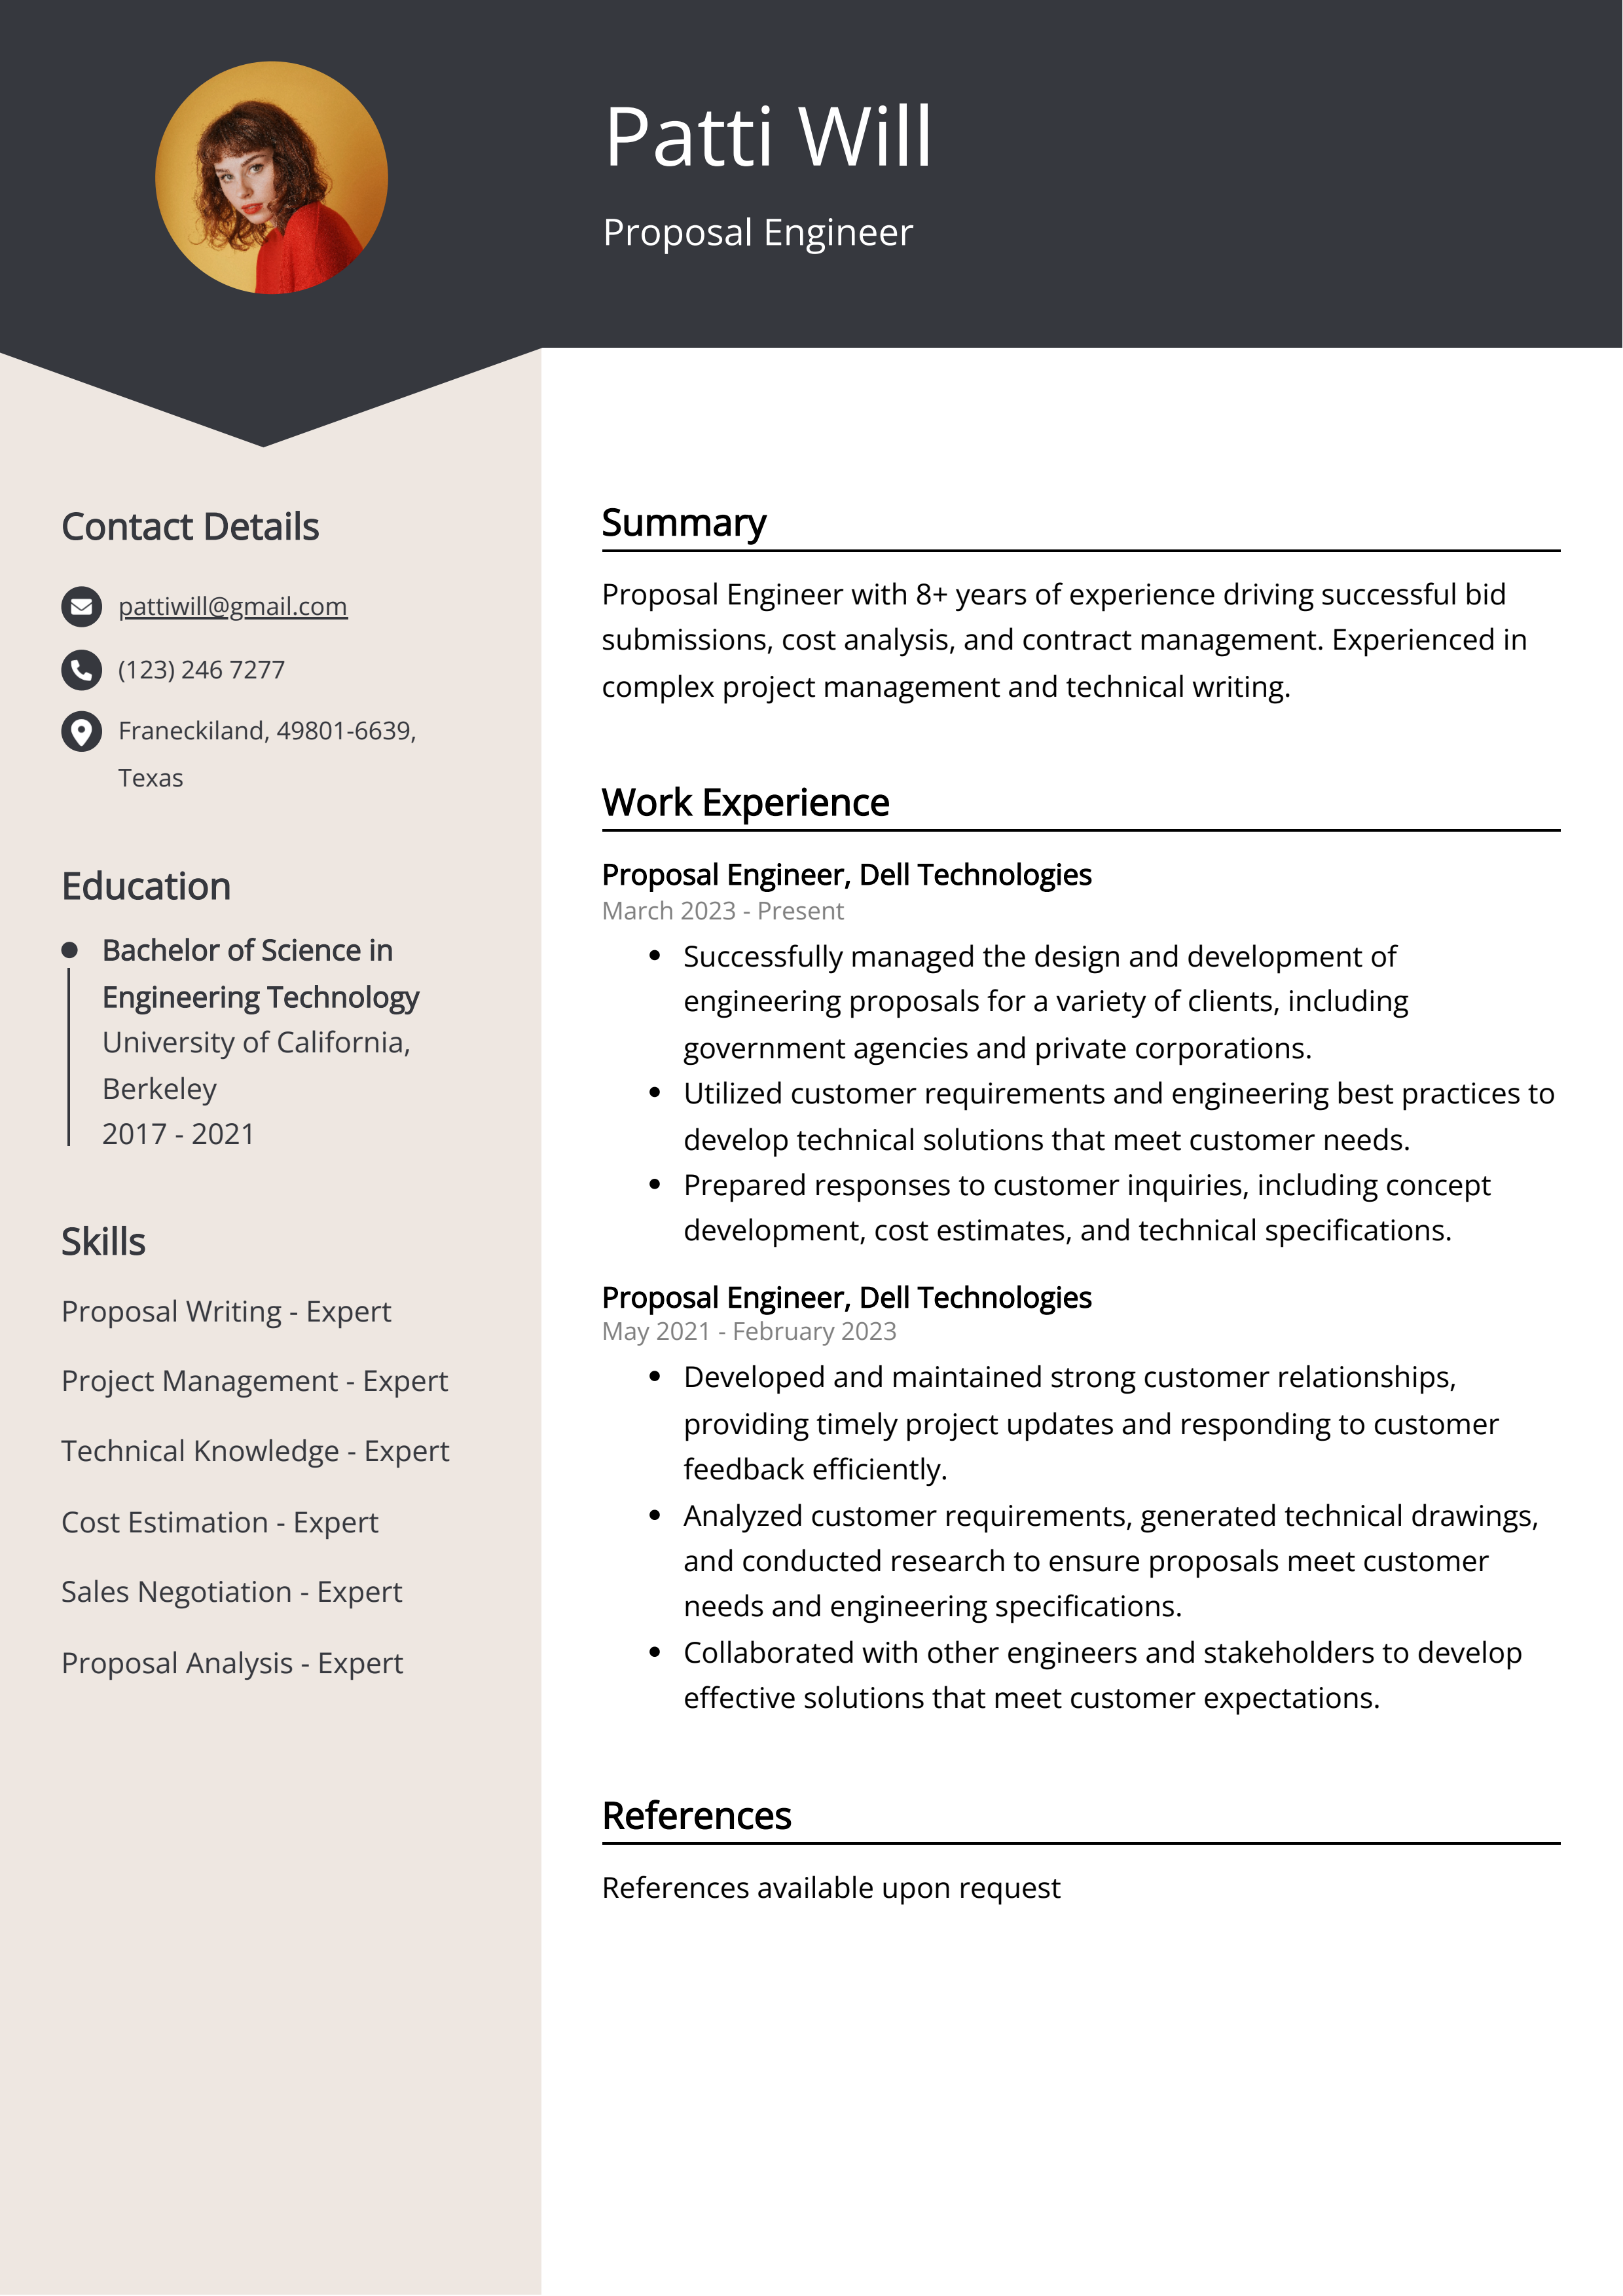 Proposal Engineer CV Example